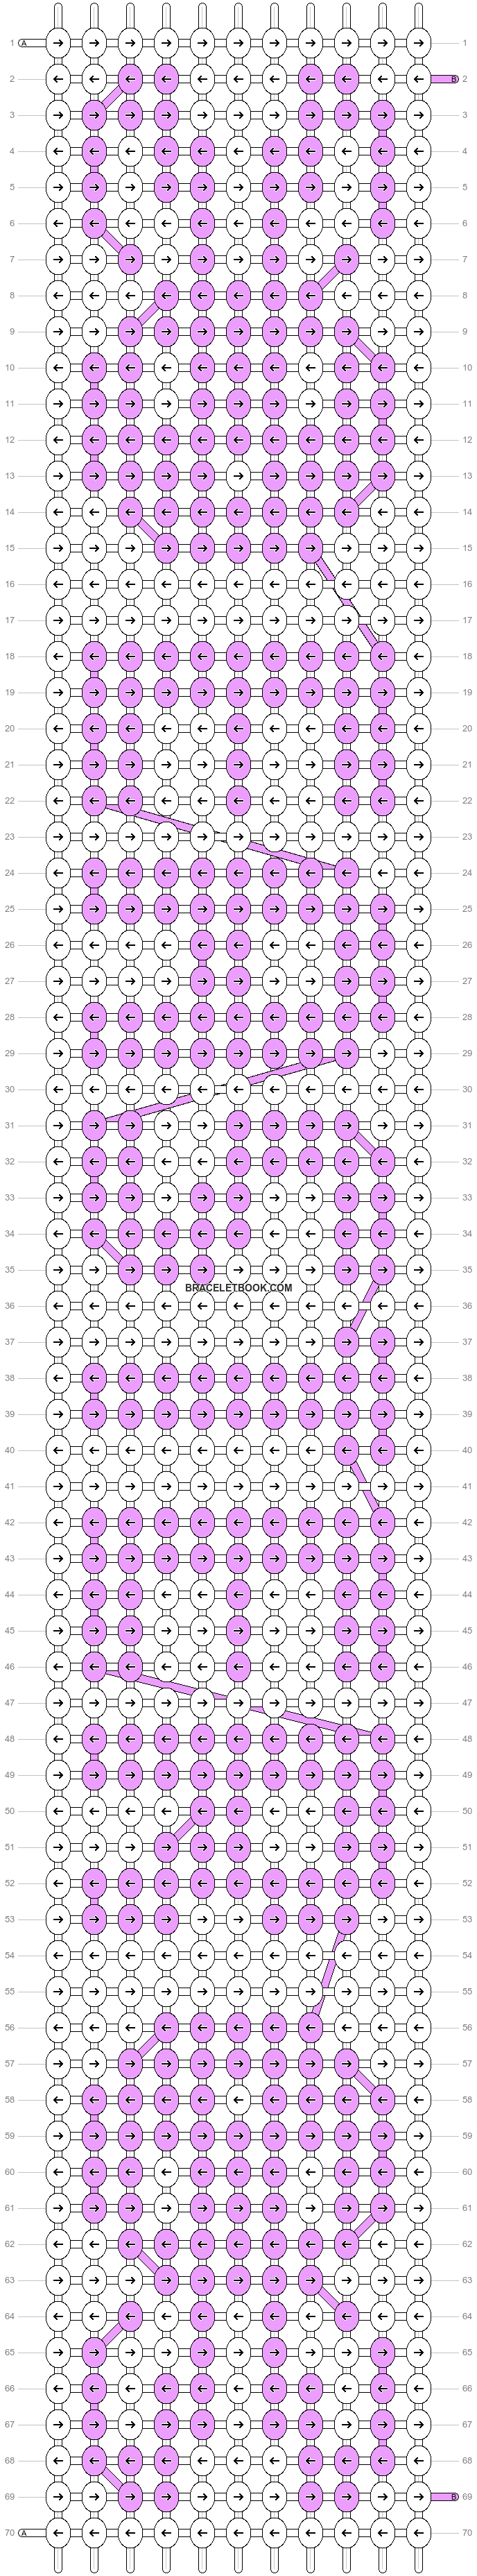 Alpha pattern #33772 pattern